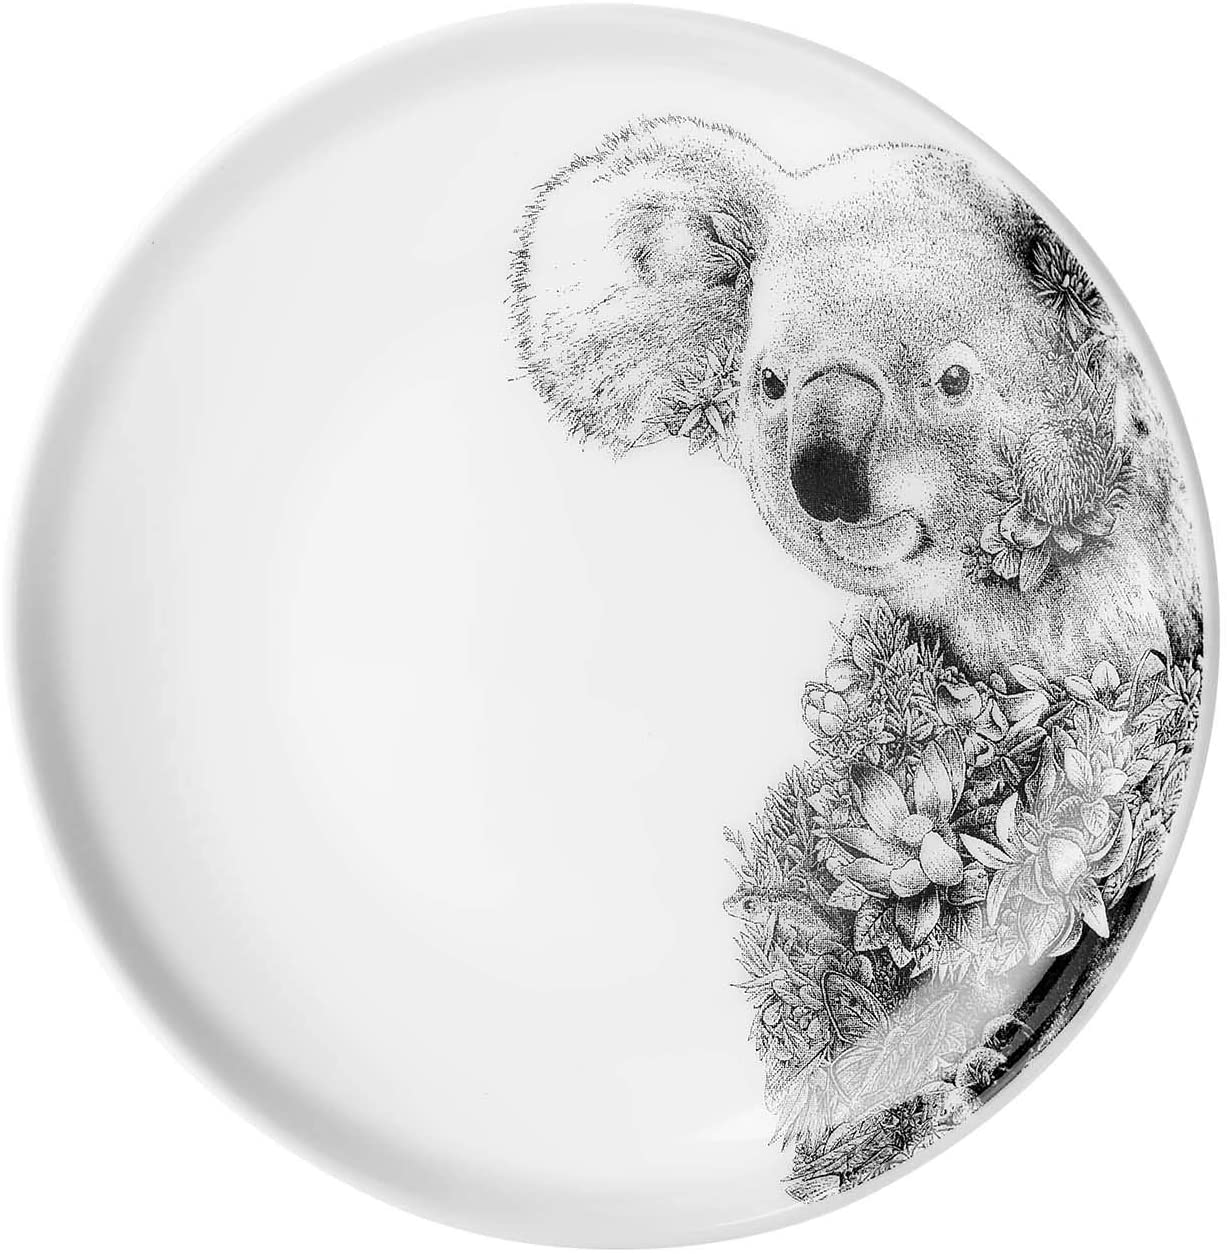 Maxwell & Williams DX0381 Marini Ferlazzo Plate Koala Bone China Porcelain Black White in Gift Box